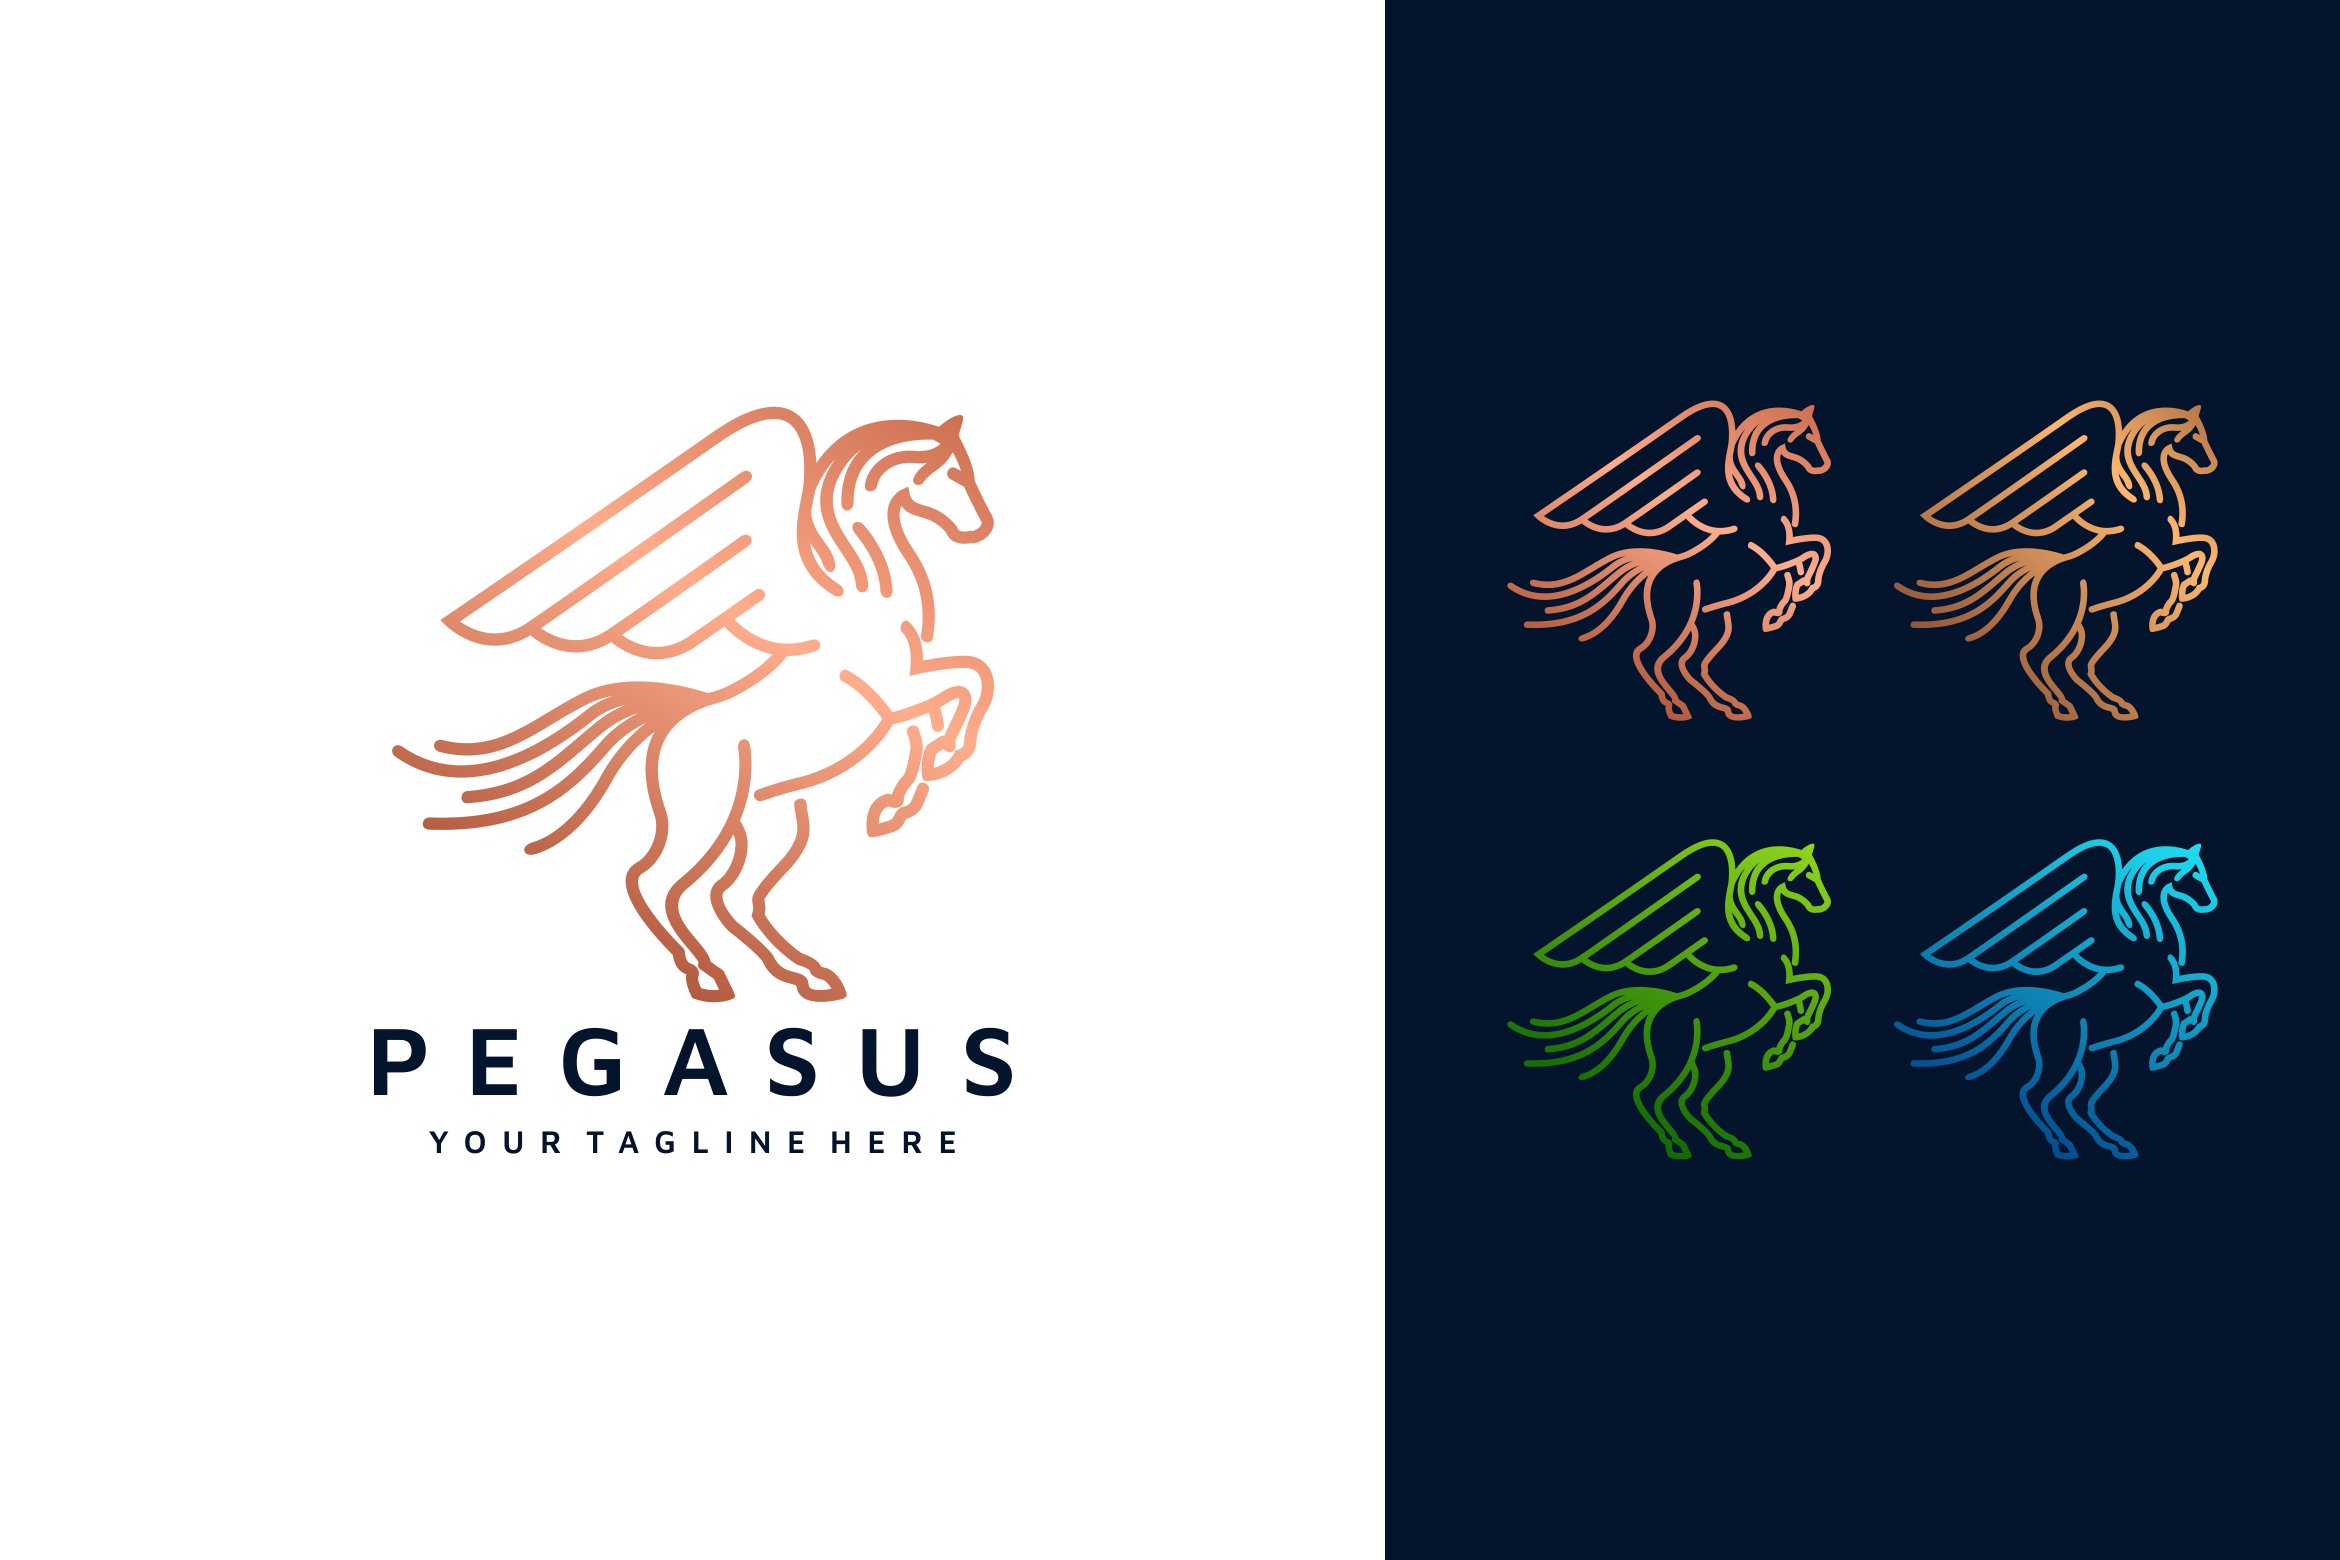 Pegasus LineArt Logo Template cover image.